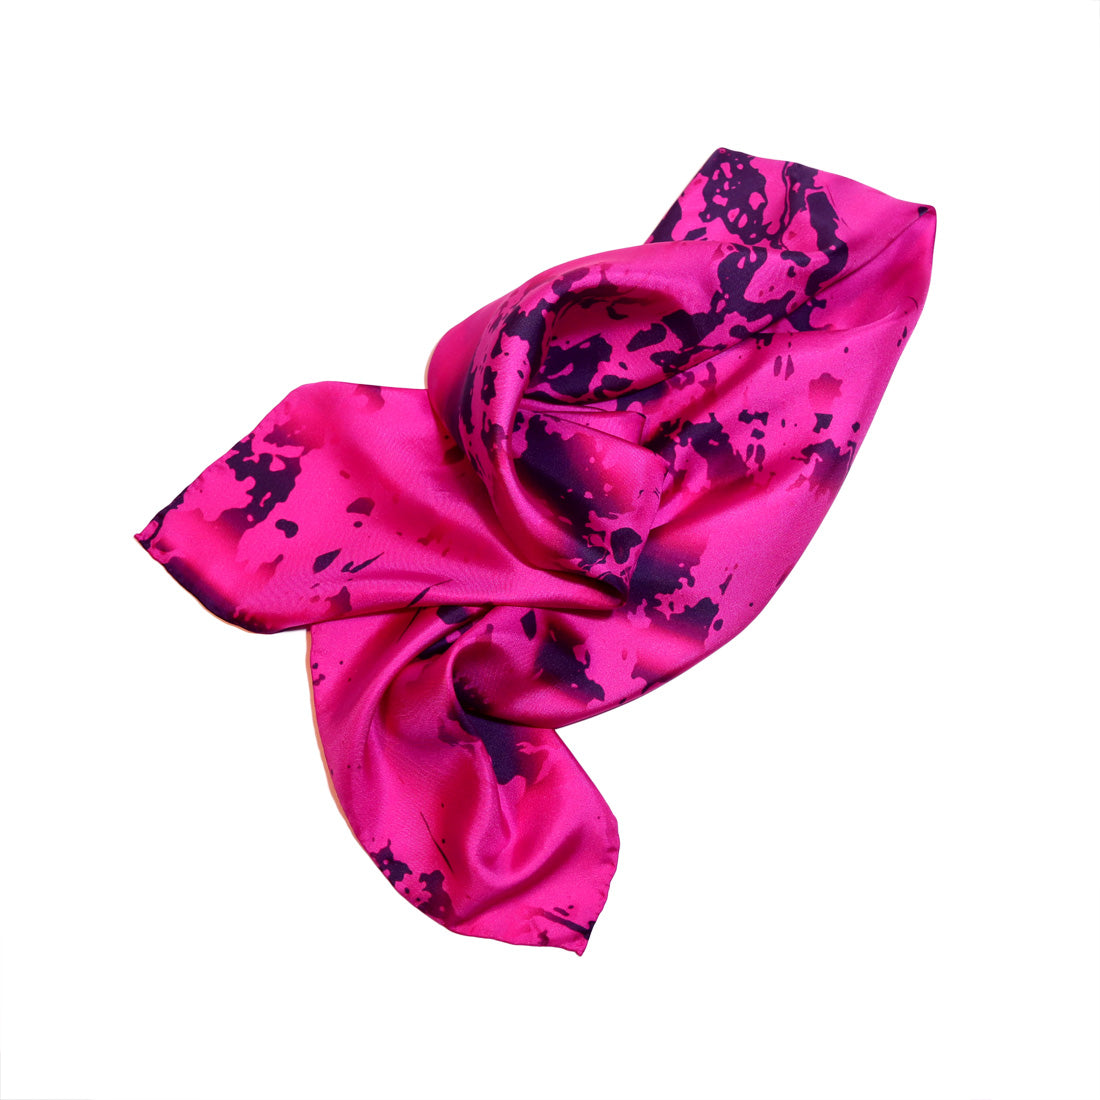 buy luxury fashion silk scarf online paris taipei tokyo from a friend of mine carre de soie foulard isetan selfridges ssense made in kyoto 送女生禮物推薦 精品絲巾